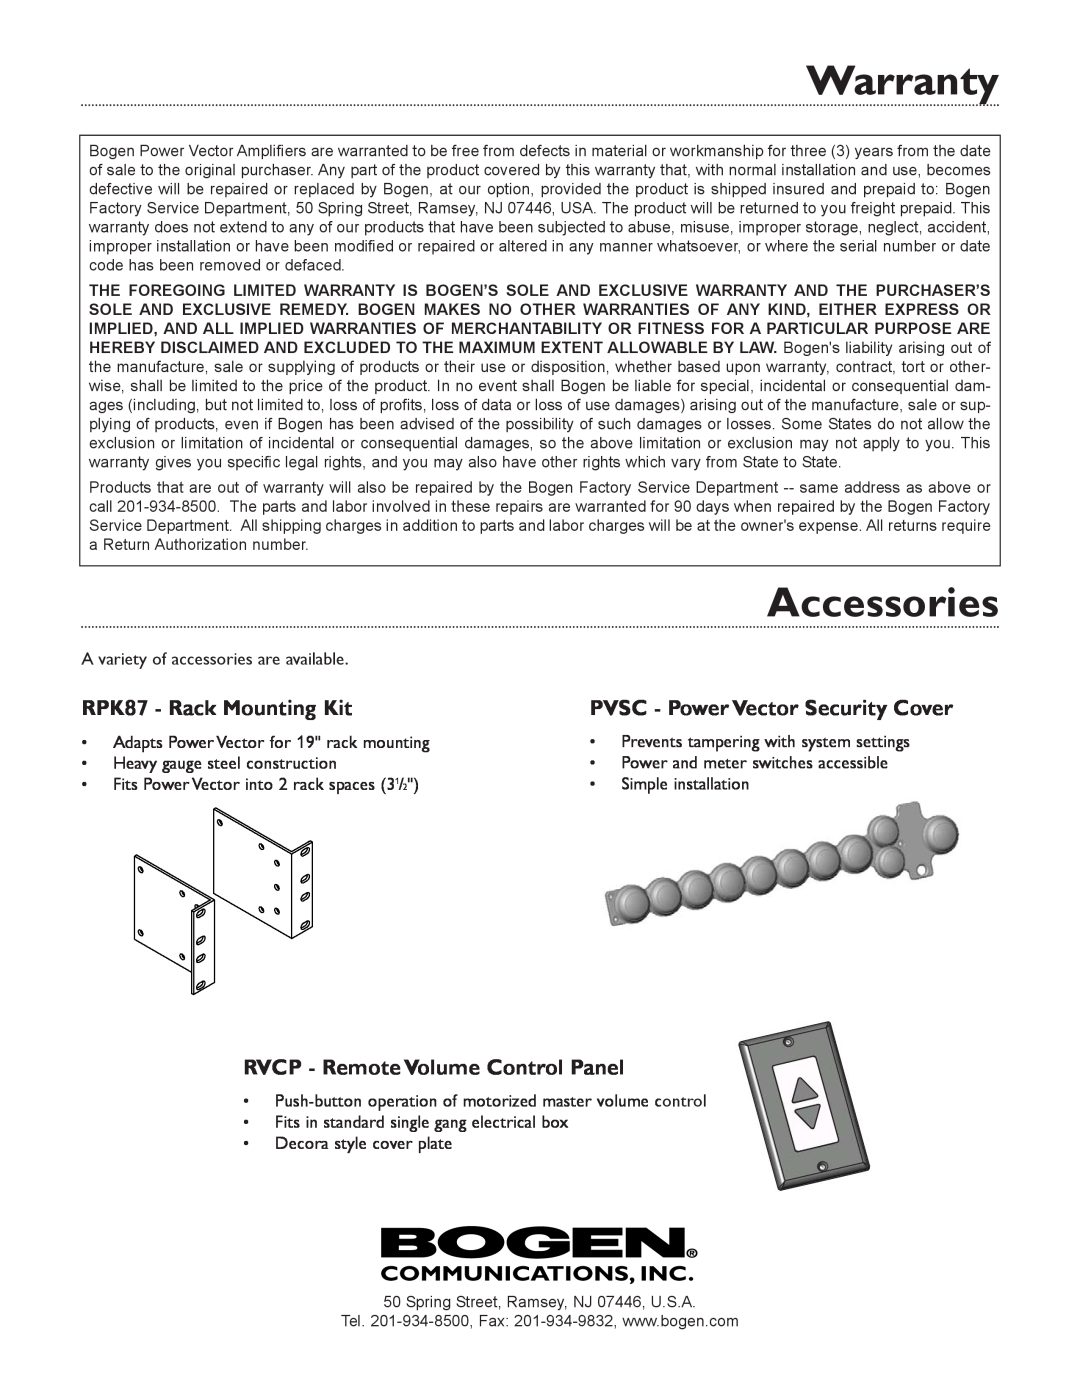 Bogen V35, & V250 specifications Warranty, Accessories, RPK87 - Rack Mounting Kit, RVCP - Remote Volume Control Panel 